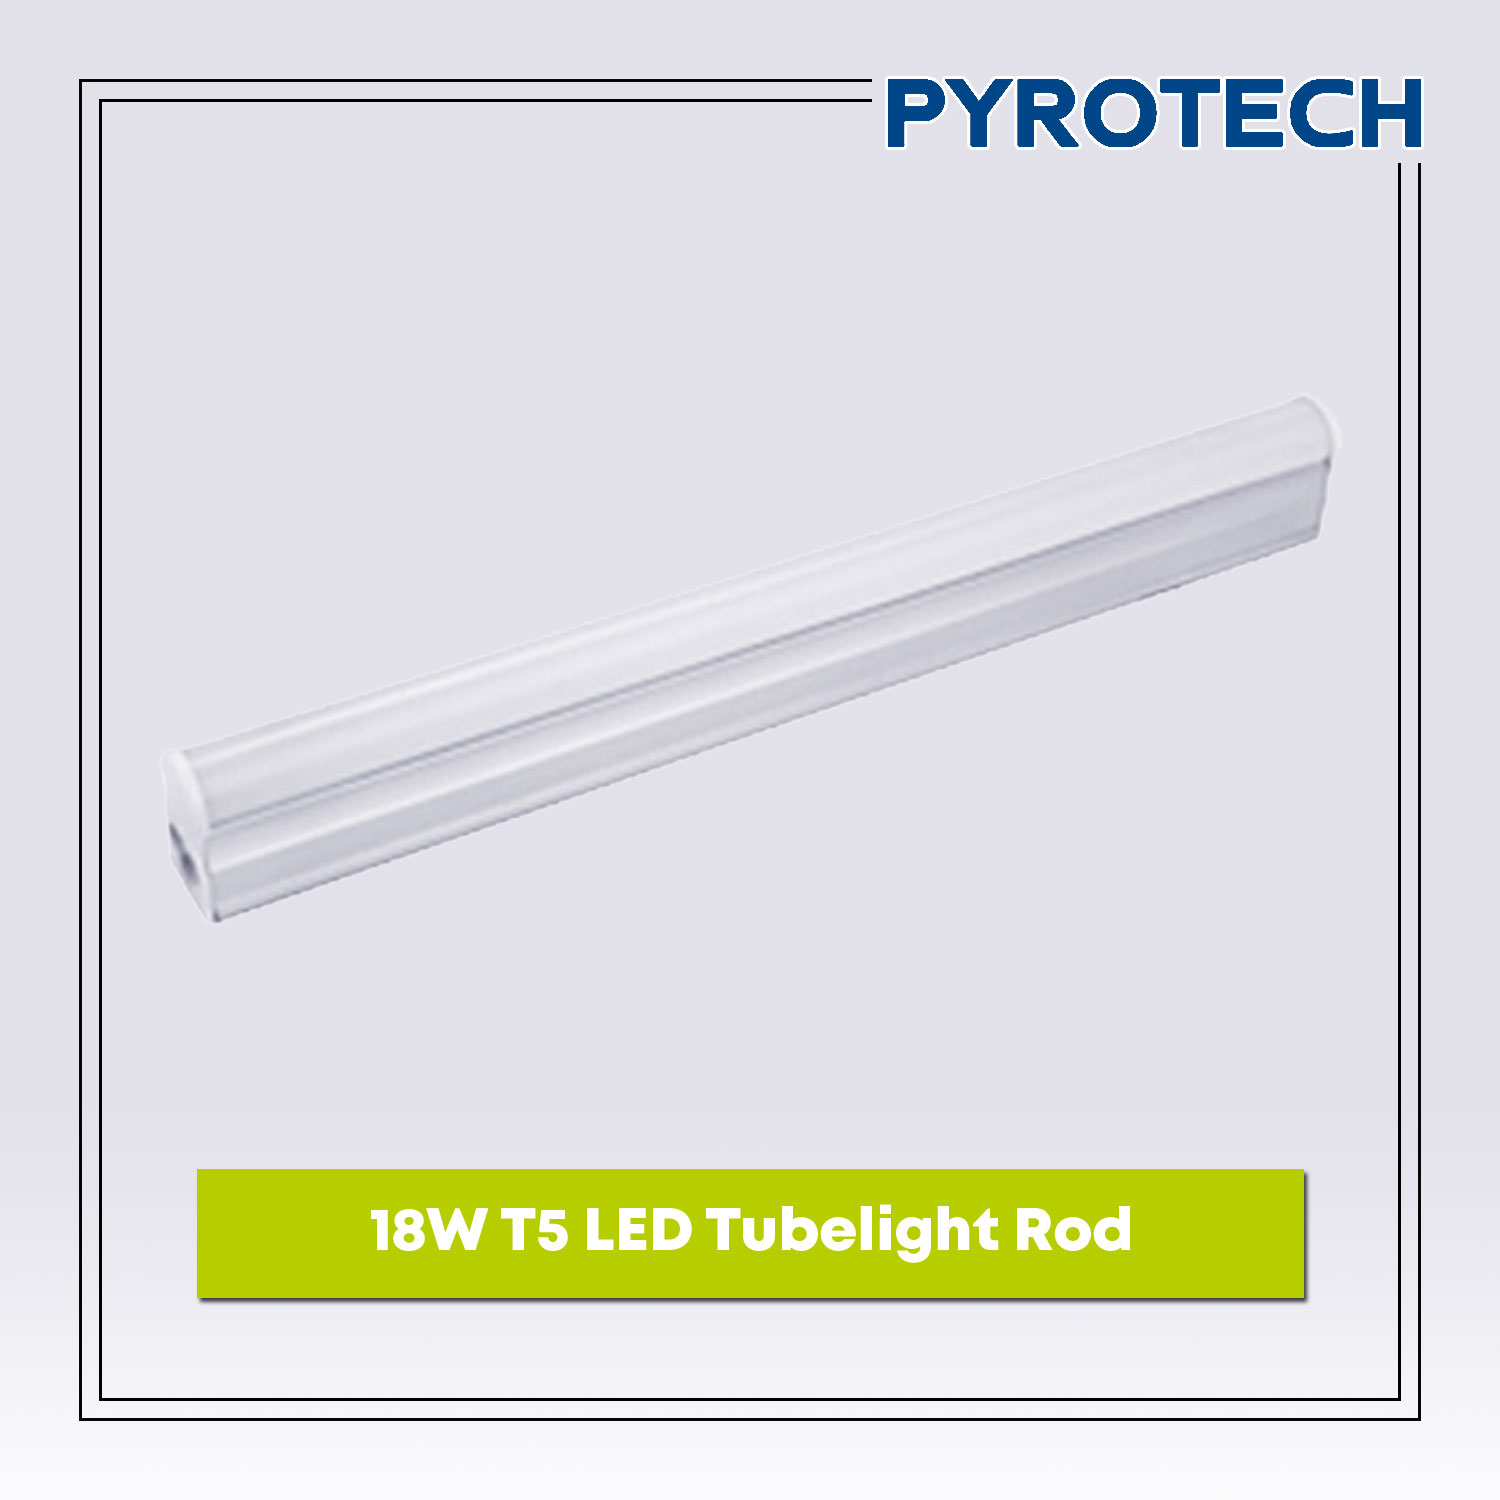 https://static.peplelectronics.com/image/cache/catalog/products/led-lights/tube-light/18w-t5-led-tubelight-rod-1500x1500.jpg